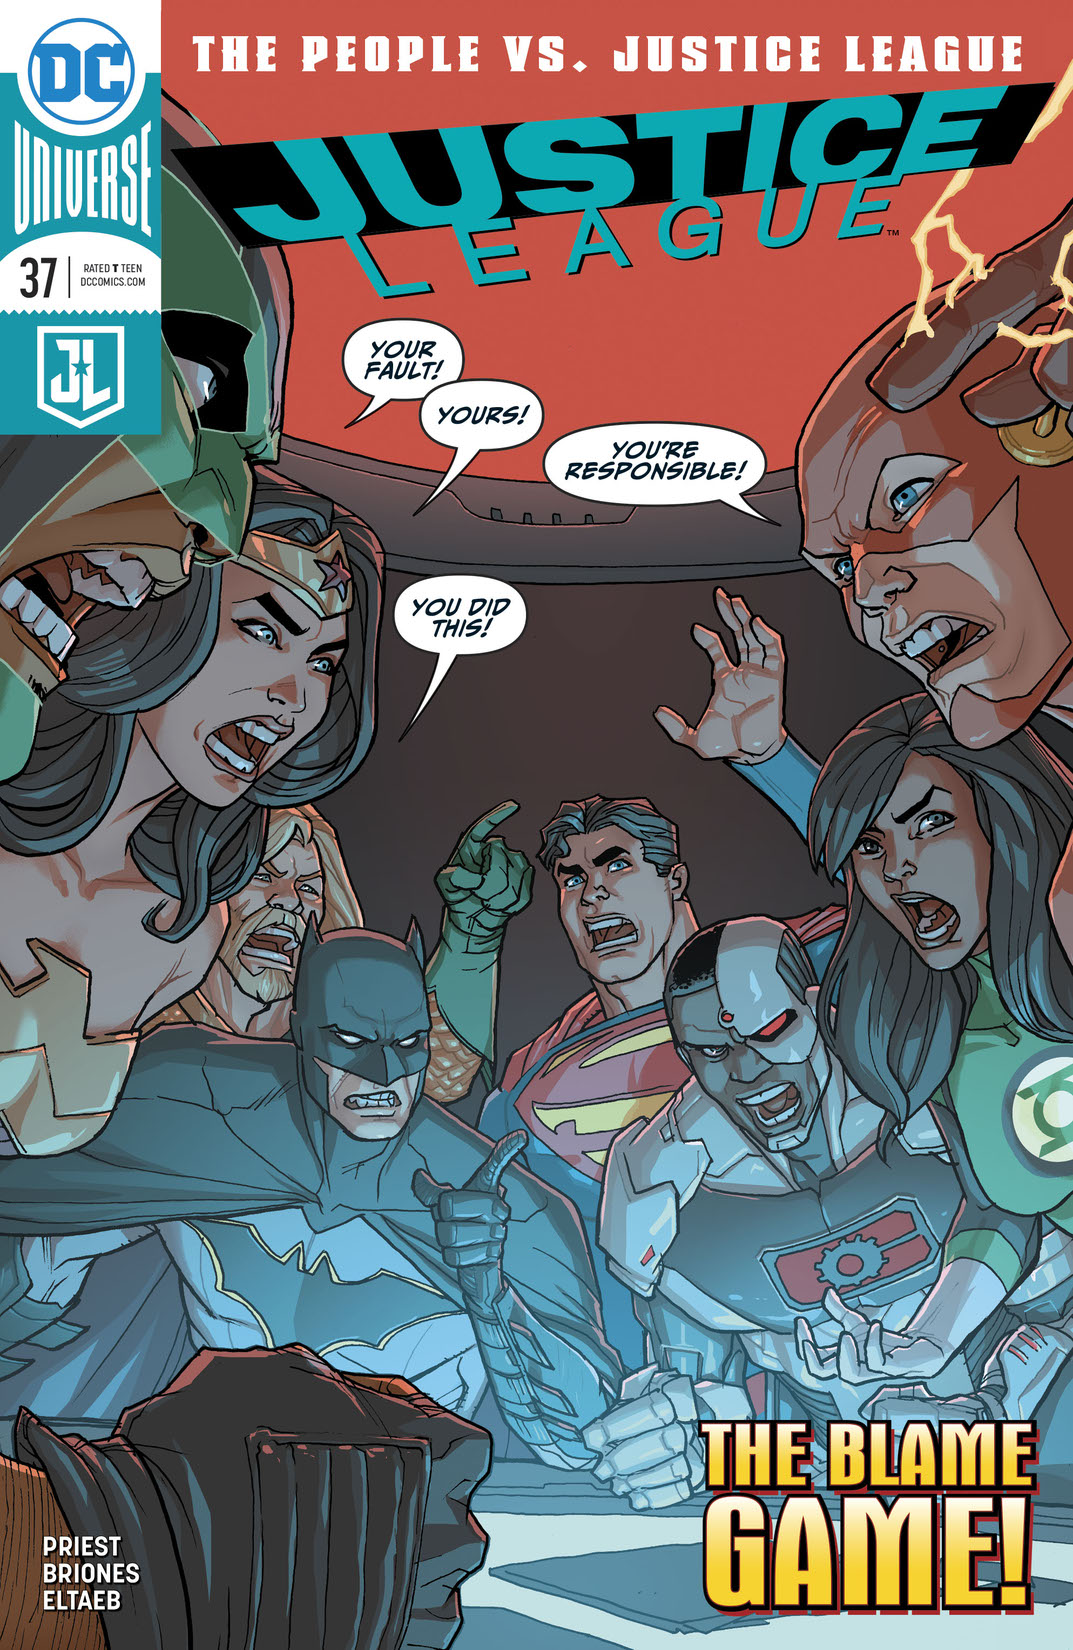 Justice League (2016-) #37 preview images